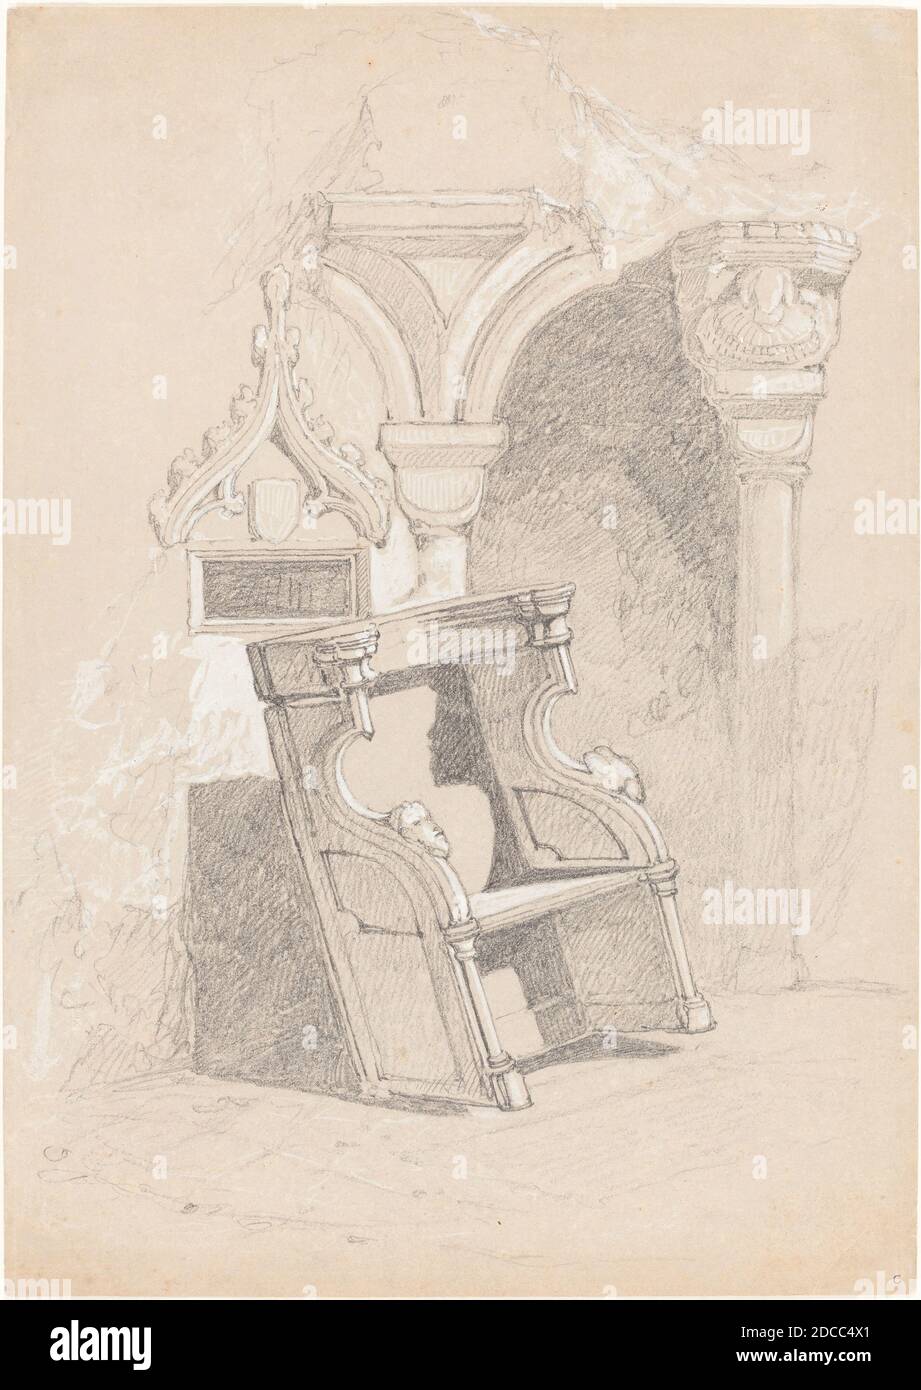 John Sell Cotman, (artista), británico, 1782 - 1842, esbozo del interior de la iglesia en ruinas con silla, grafito aumentado con papel blanco sobre gris, total: 33.2 x 23.5 cm (13 1/16 x 9 1/4 pulg Foto de stock